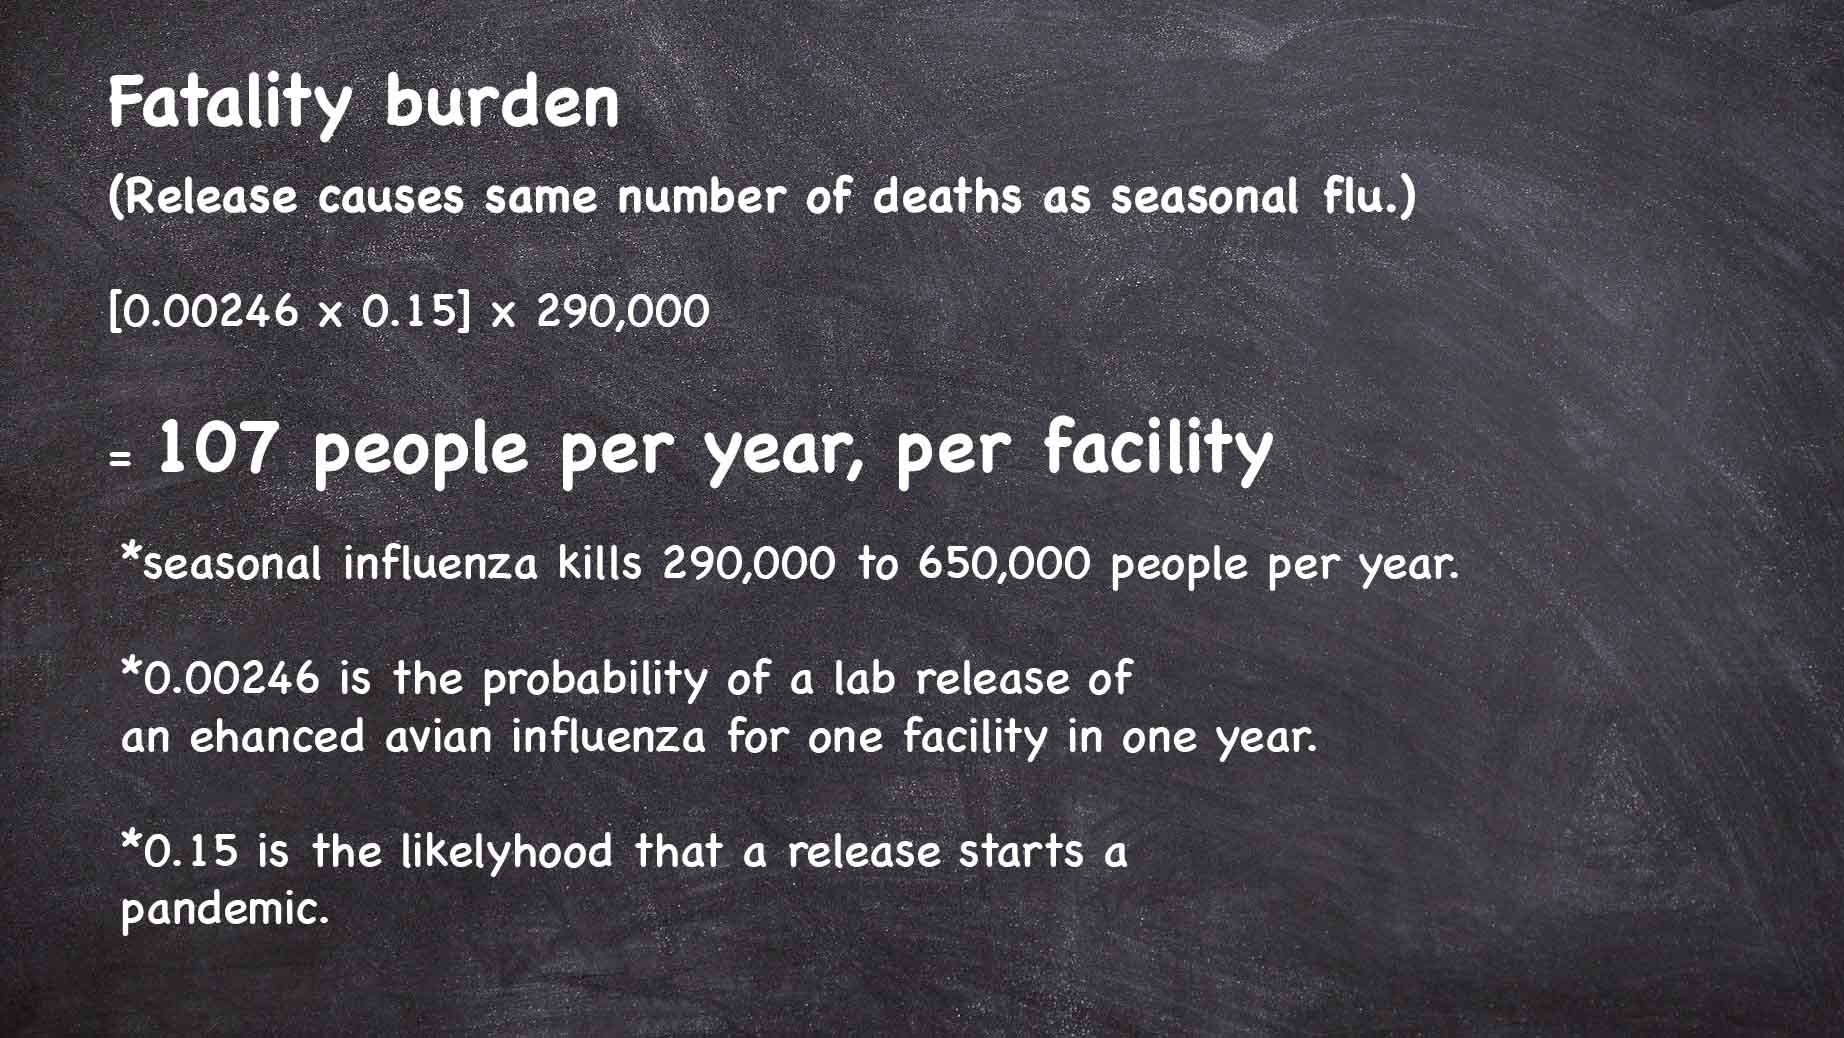 Fatality burden calculation. 